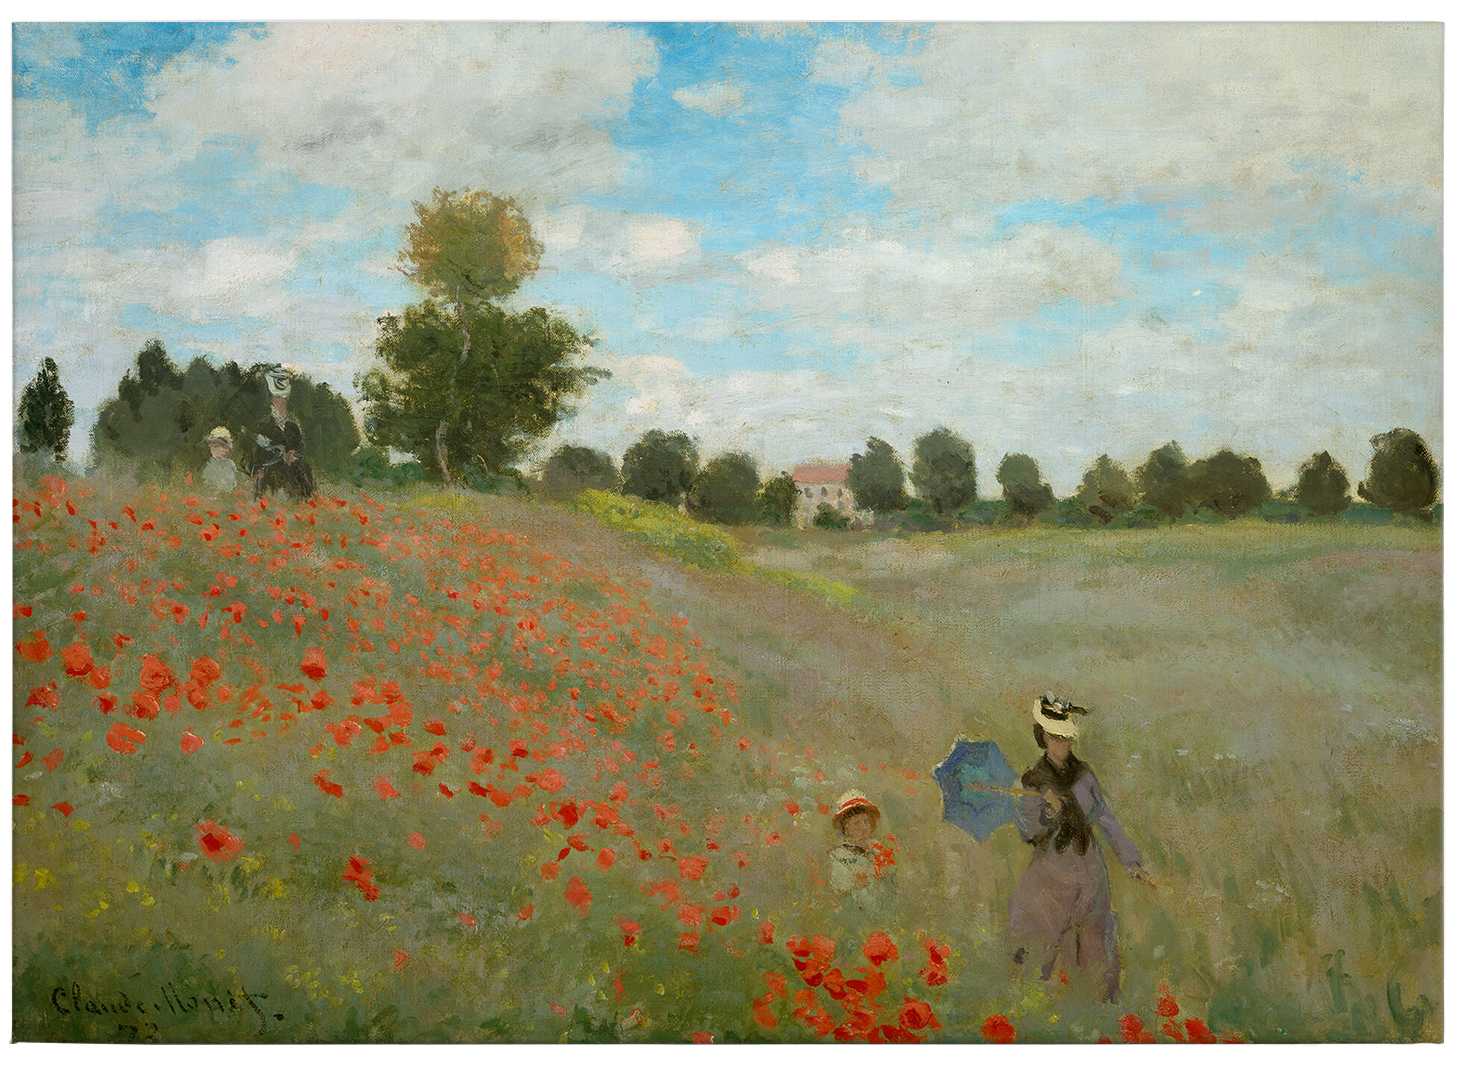             Tela di Monet "Campo di papaveri presso Argenteuil" - 0,70 m x 0,50 m
        